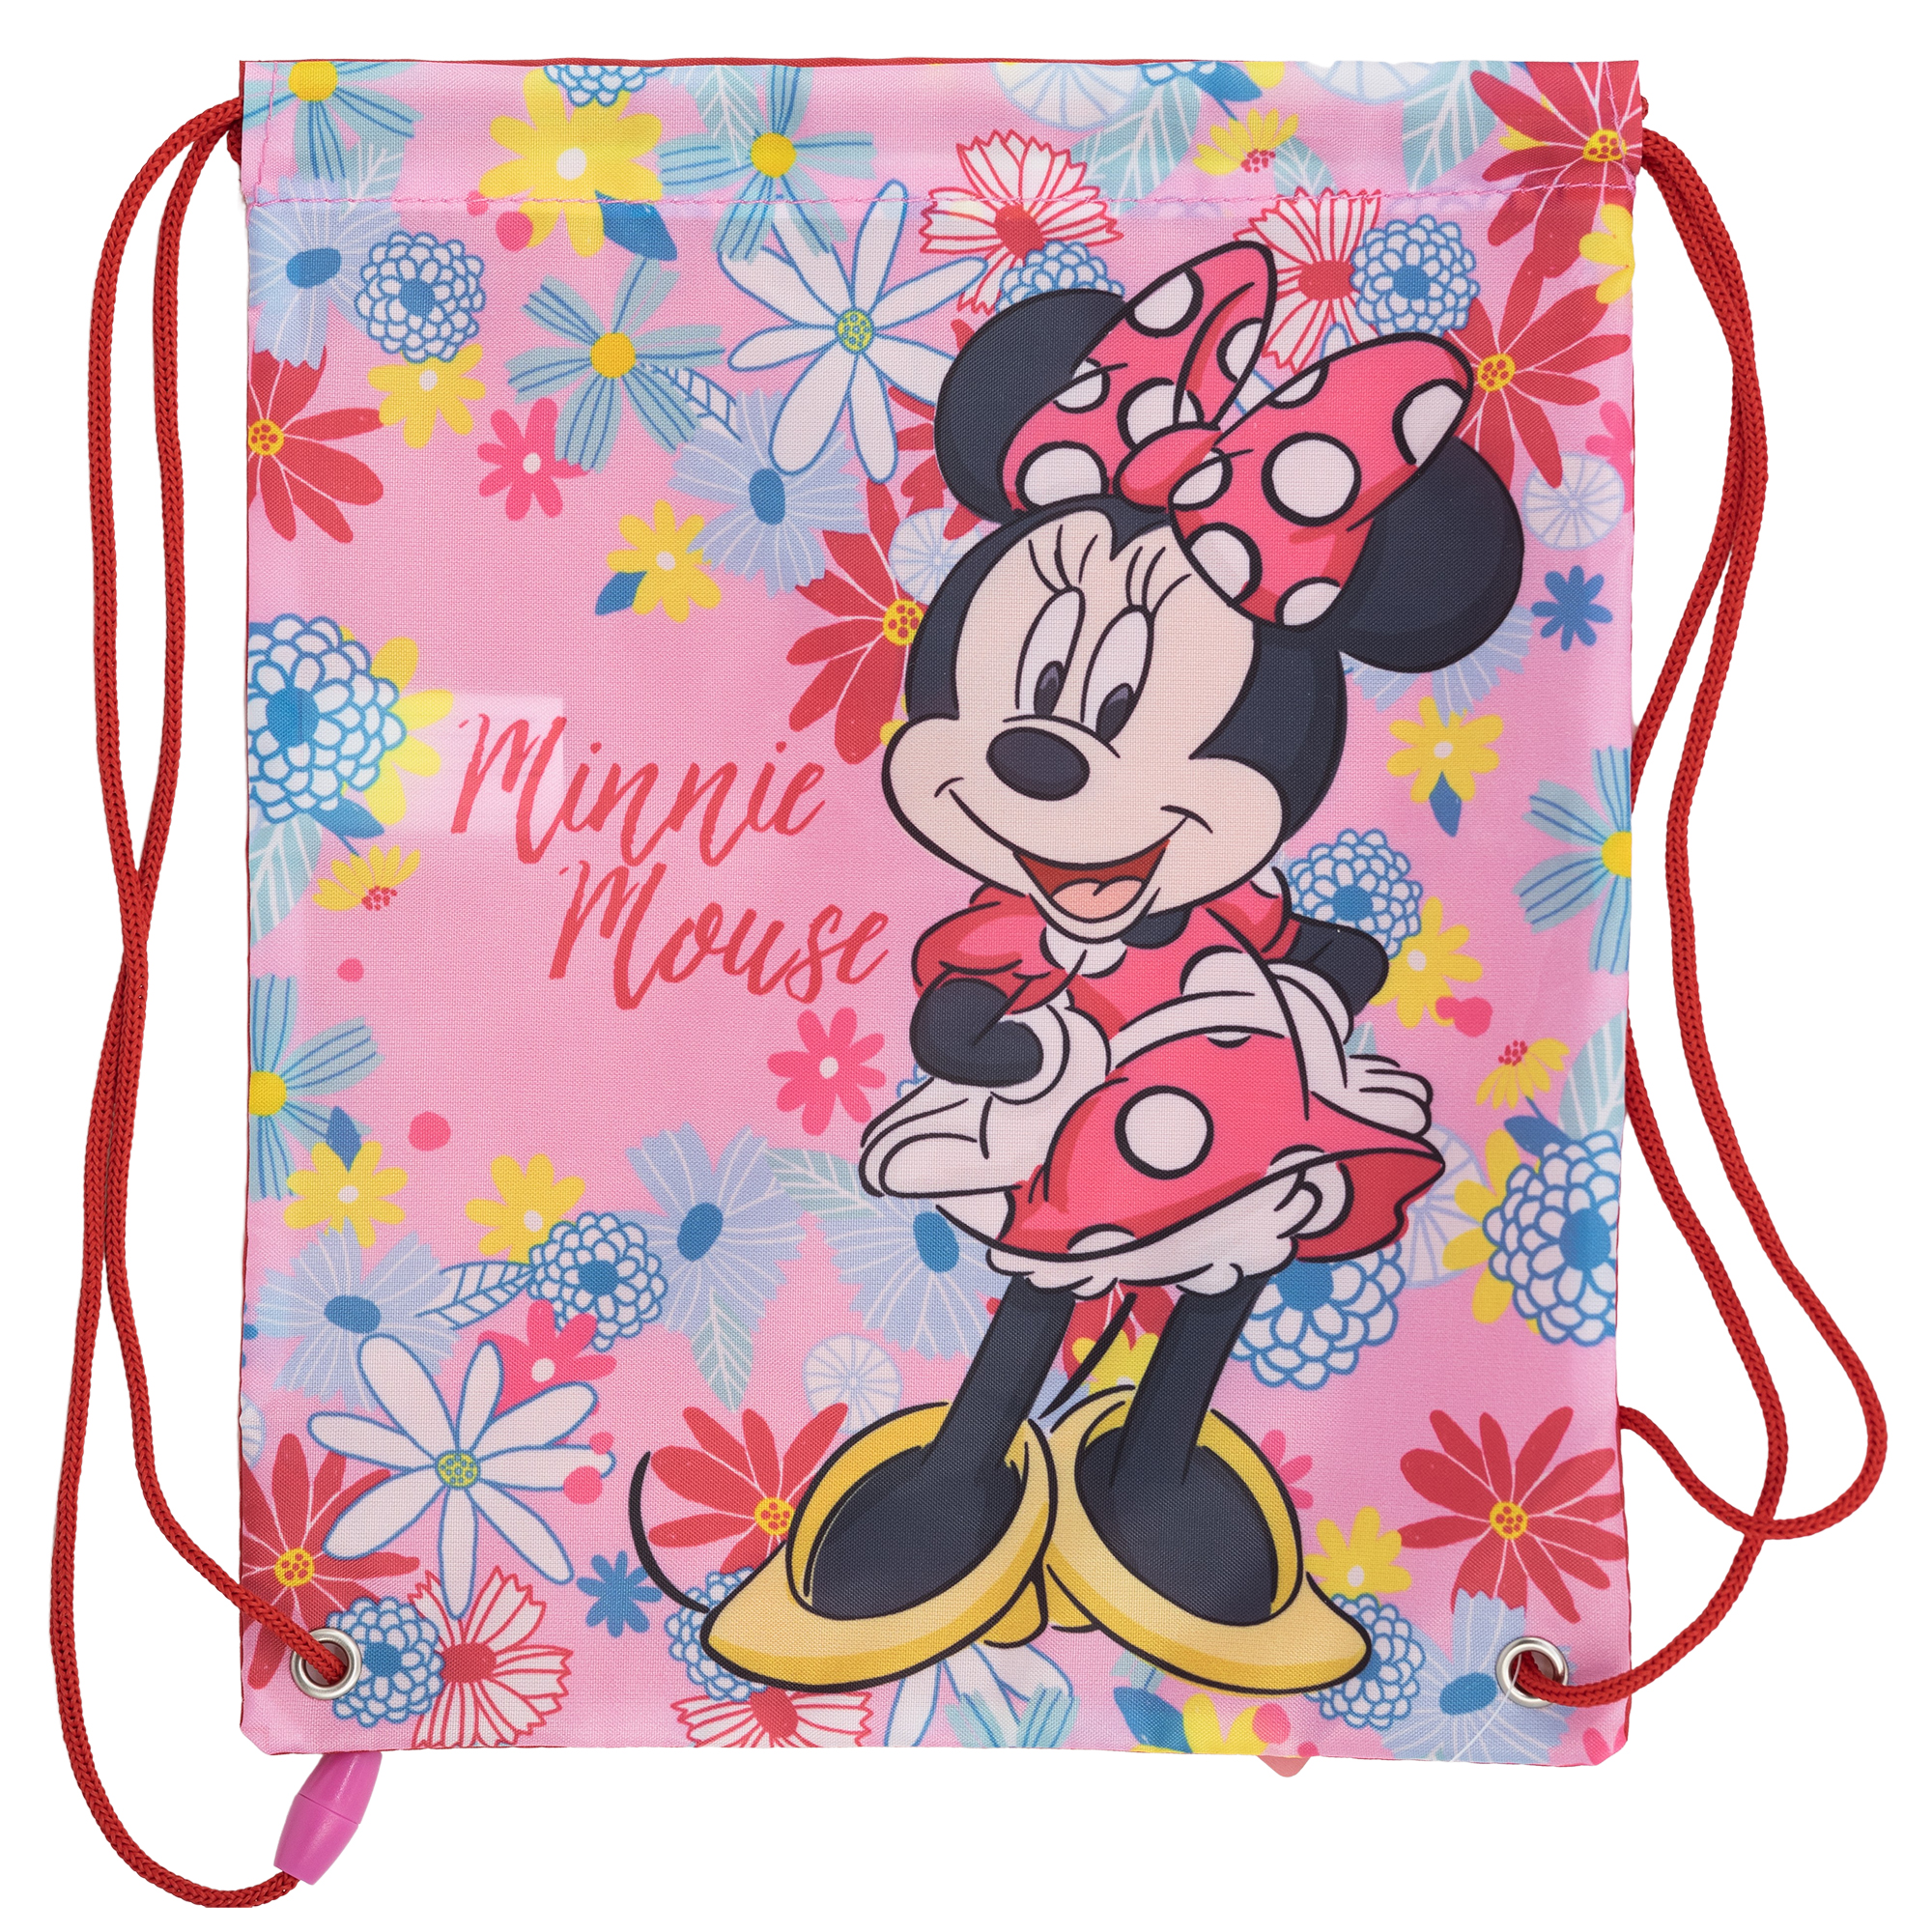 Minnie Mouse Lunchtasche im Frühlingslook 